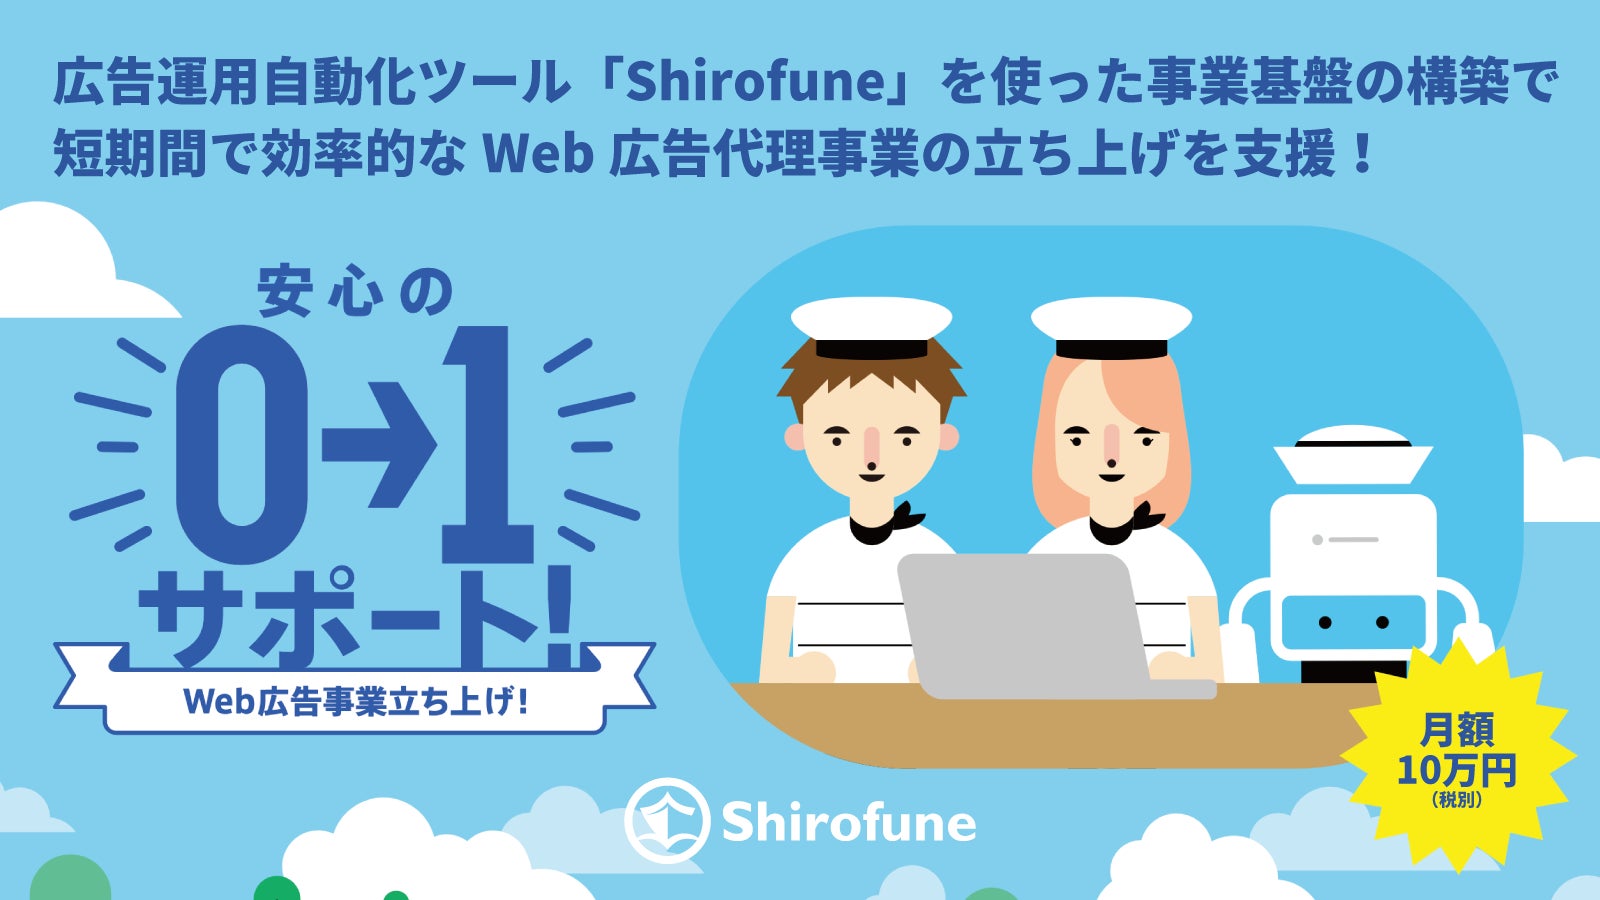 Shirofune、Web広告代理業の立ち上げ支援サービスを提供開始のサブ画像1